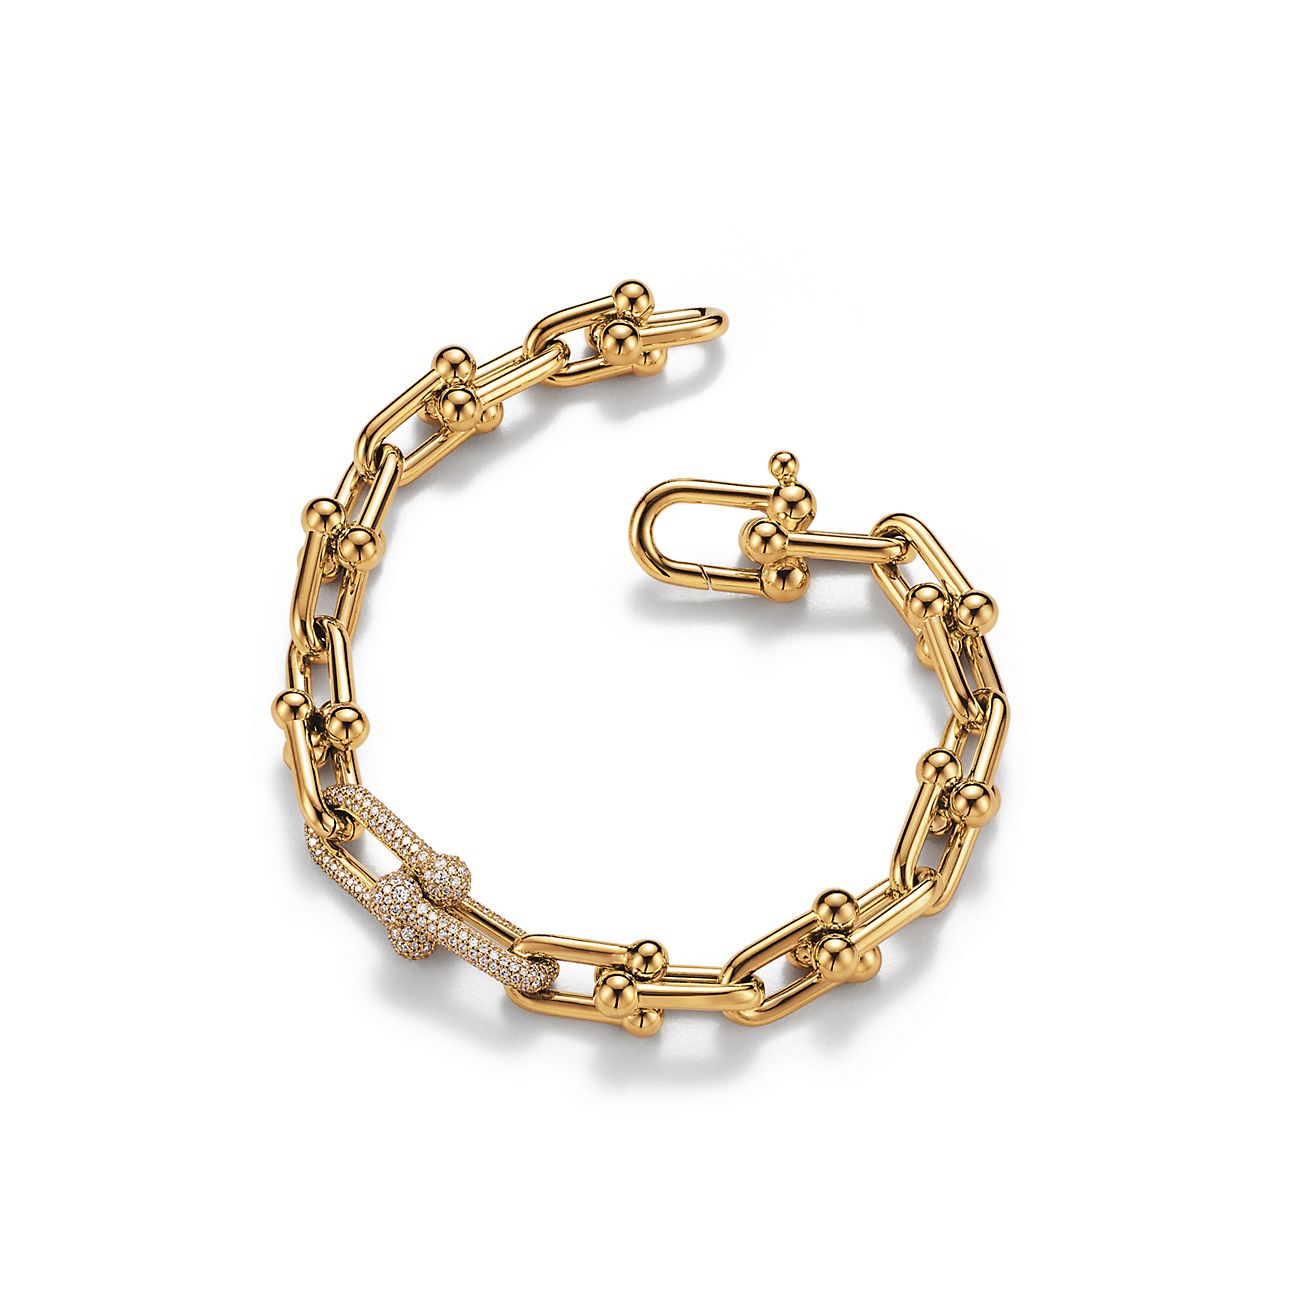 Tiffany Hardwear Large Link Bracelet in Yellow Gold - Size Medium